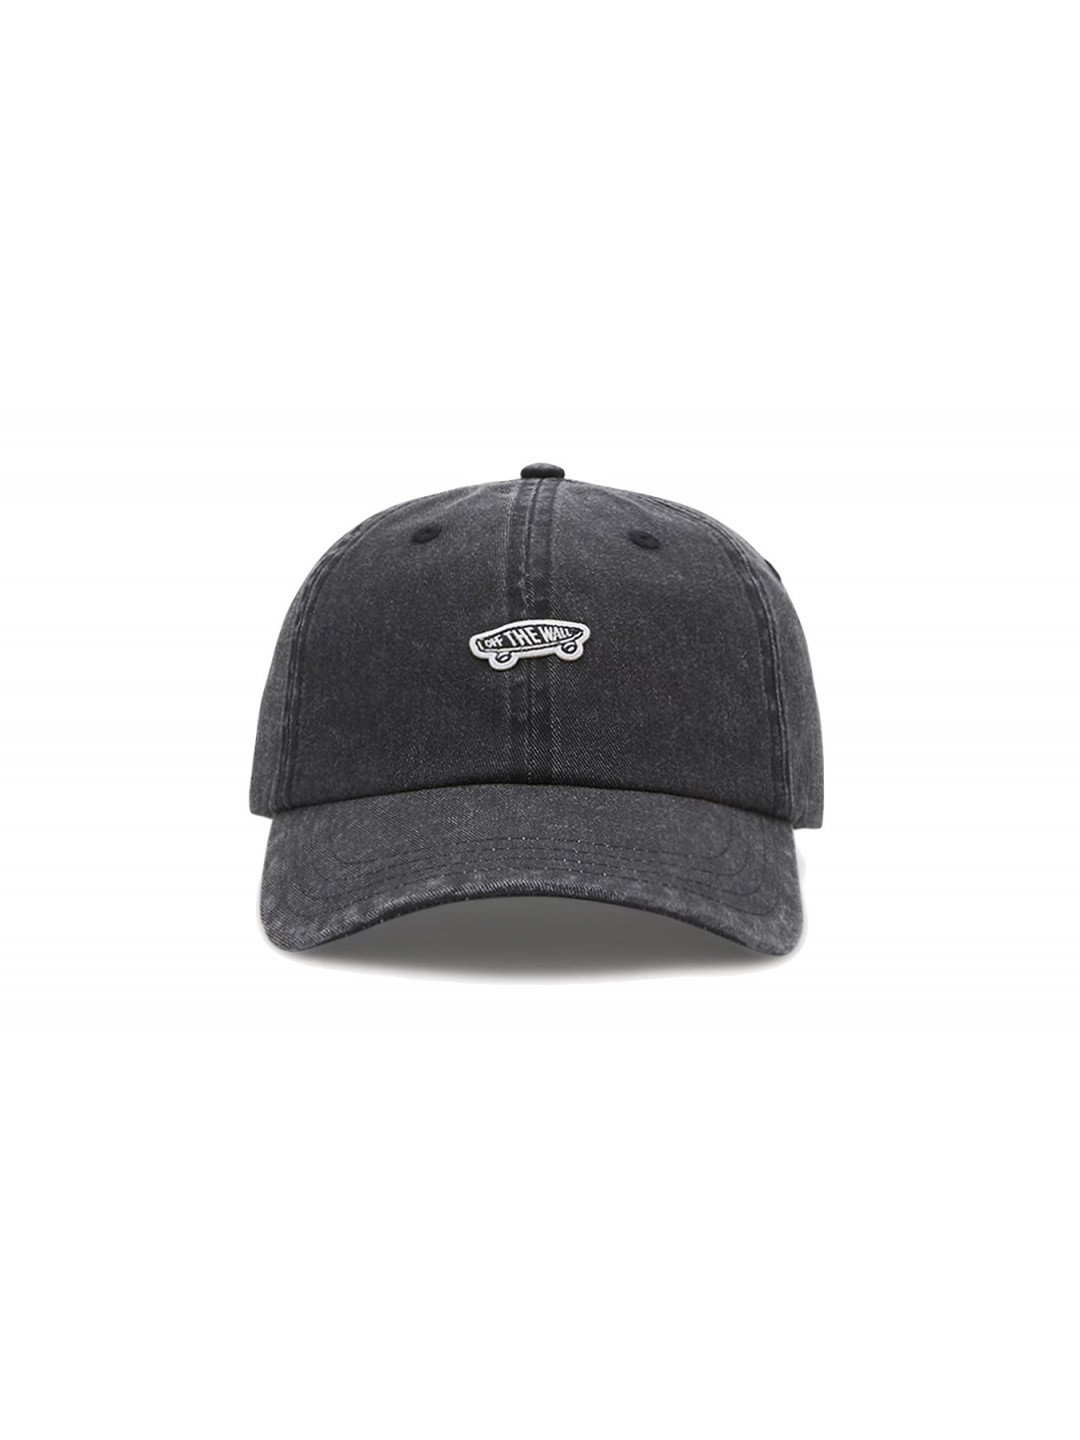 Vans Premium Logo Curved Bill Hat